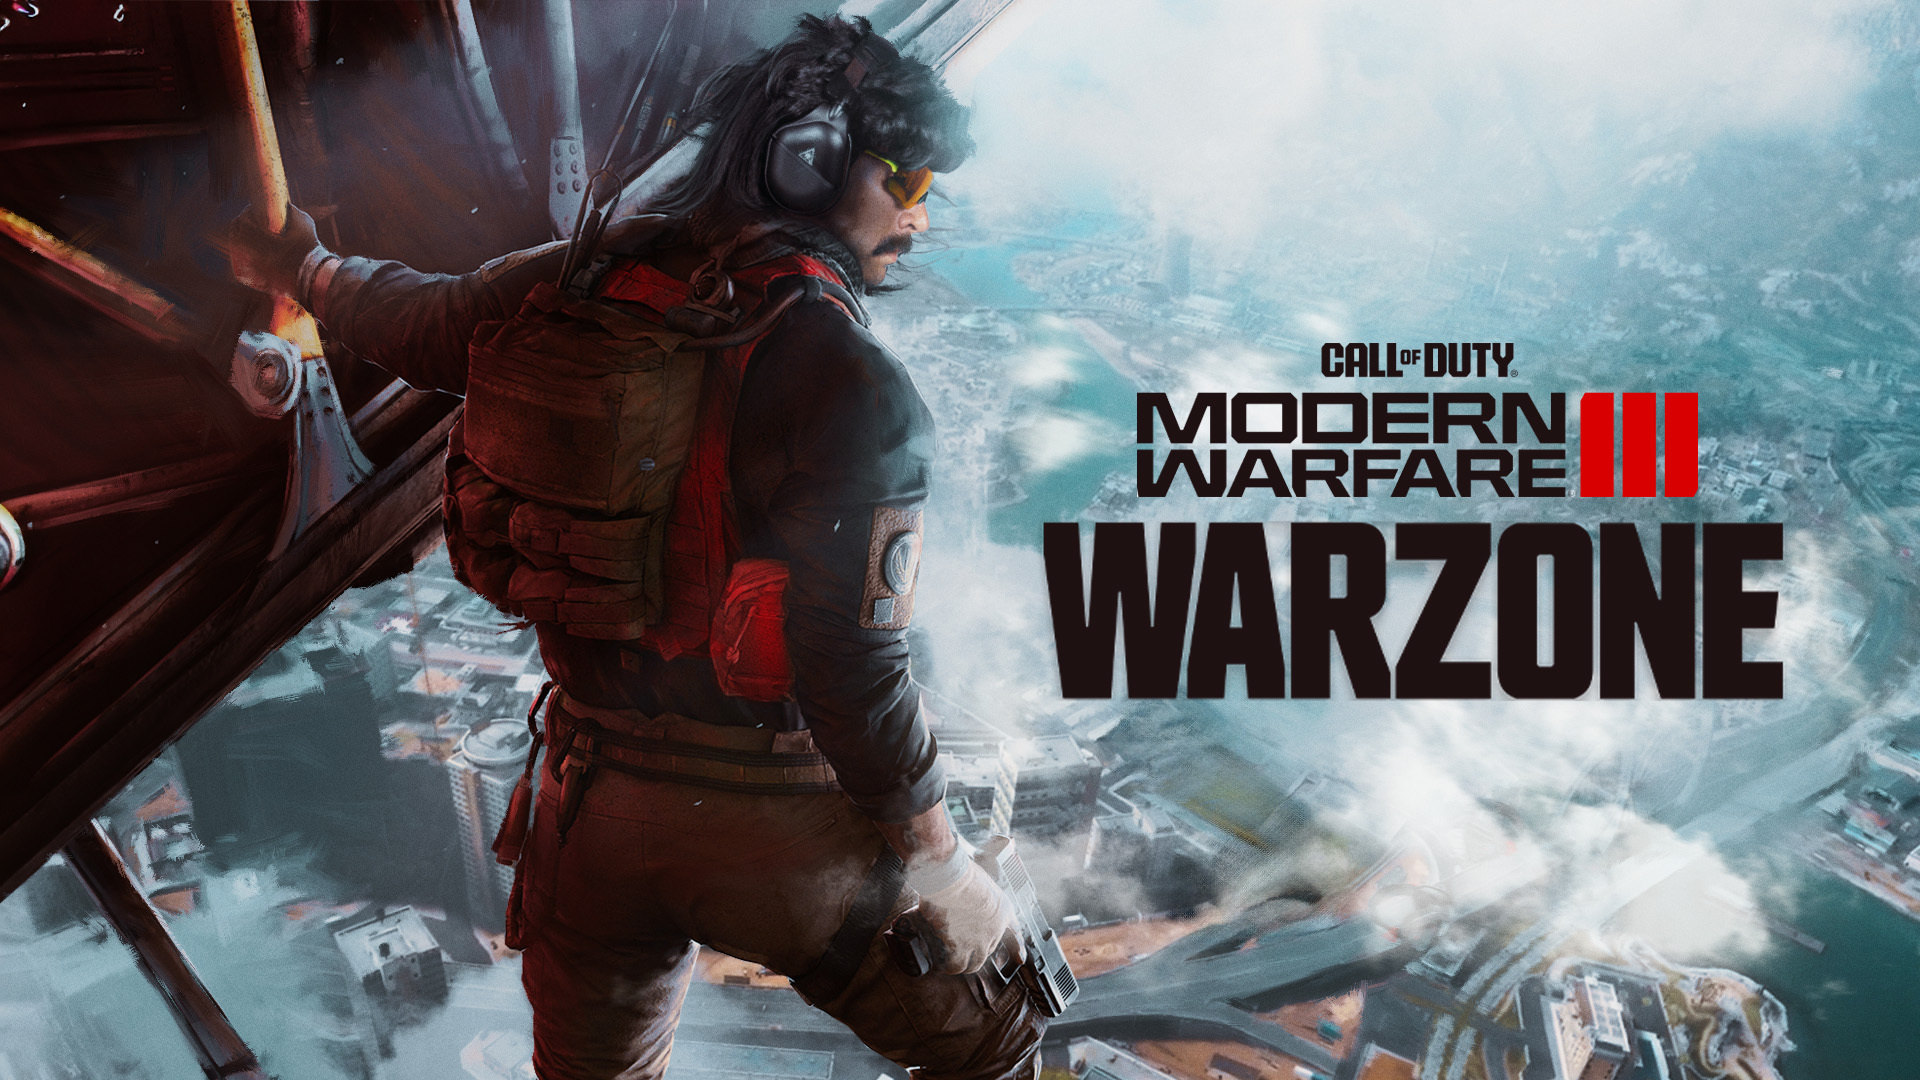 🔴 LIVE - 2 NUKES! CRACKED Movement on PC! Modern Warfare 3 BETA Gameplay  (WEEK 2) 